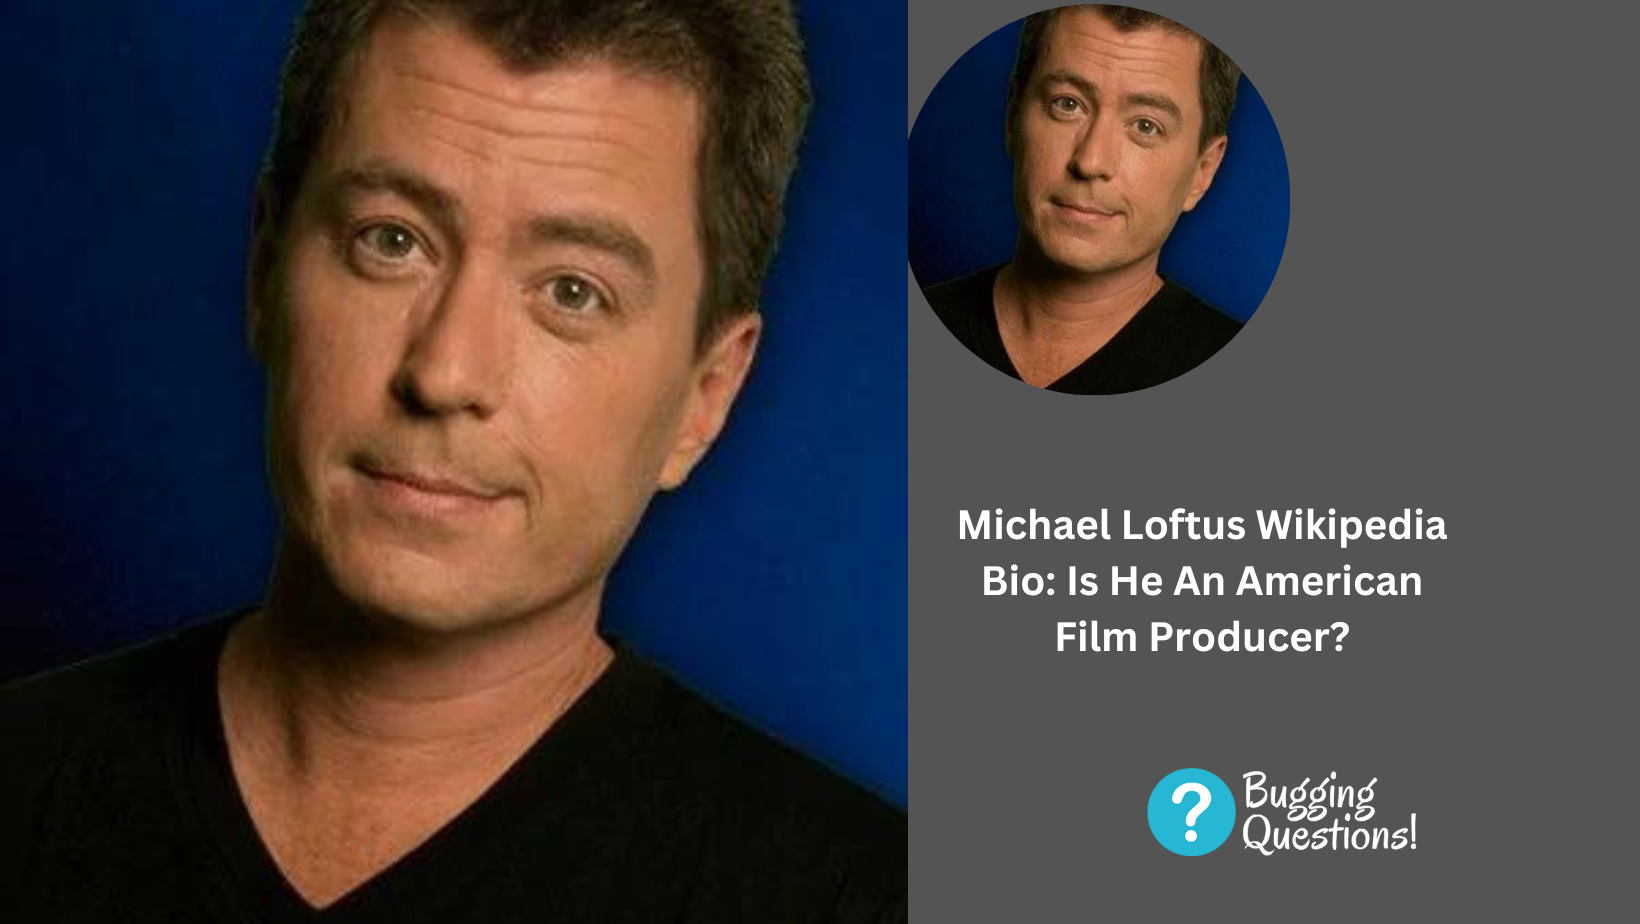 Michael Loftus Wikipedia Bio: Is He An American Film Producer?